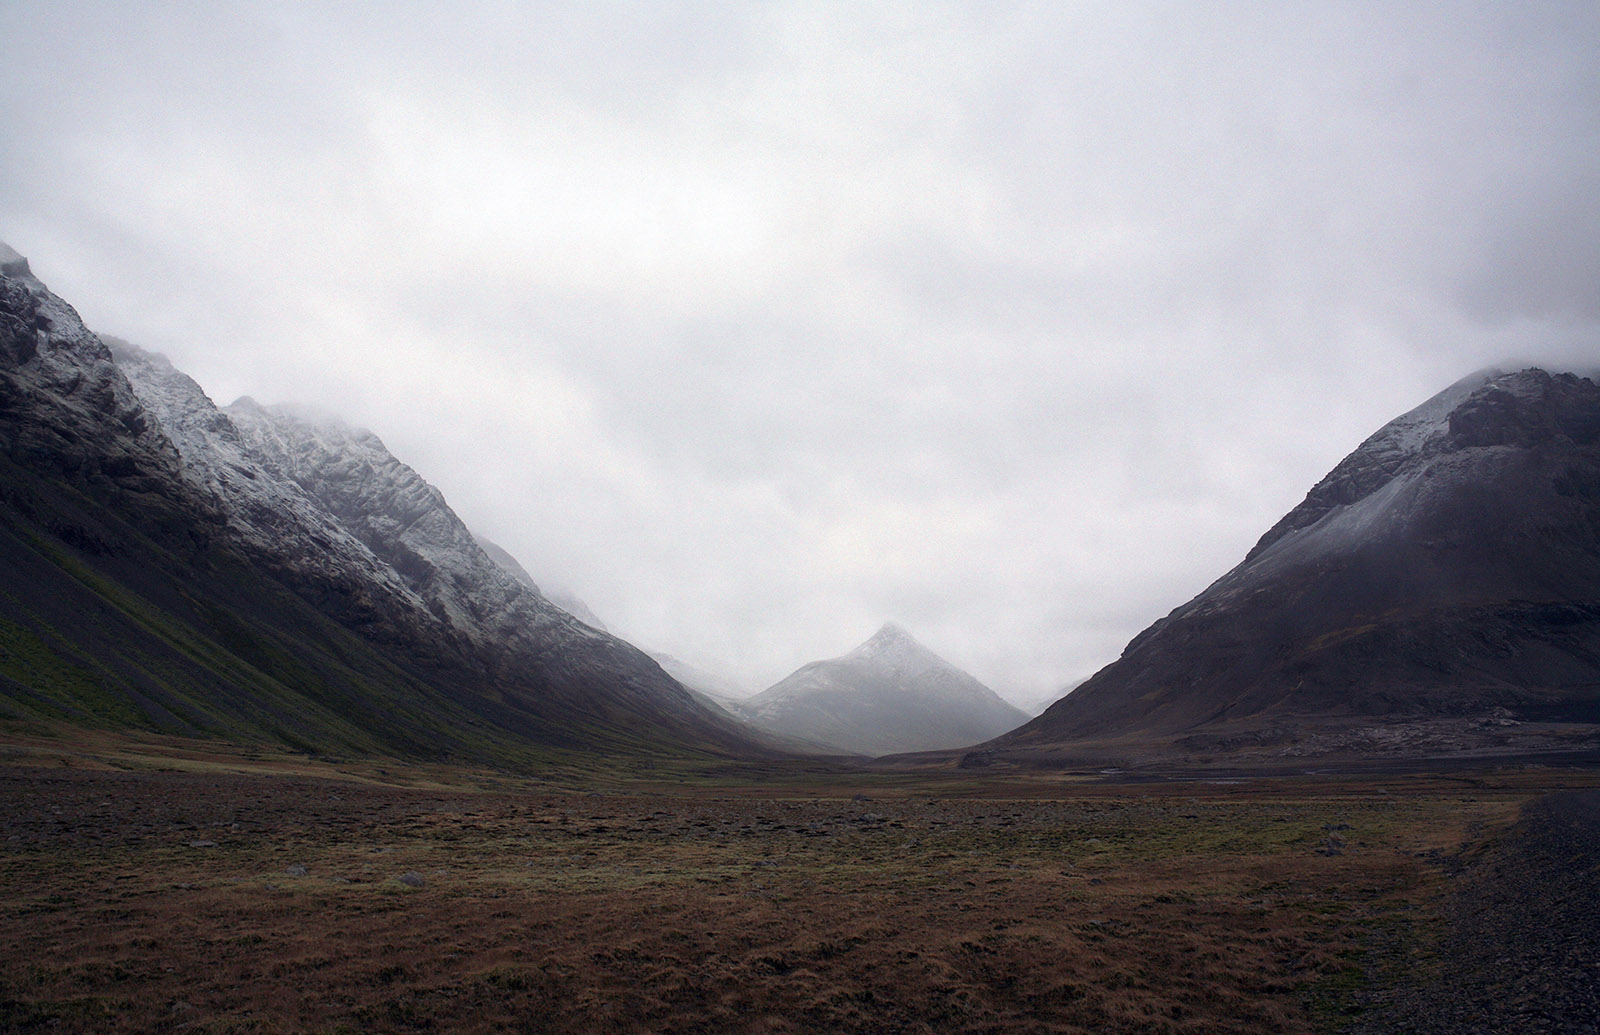 Landscape photography shot in Iceland by Namiko Kitaura